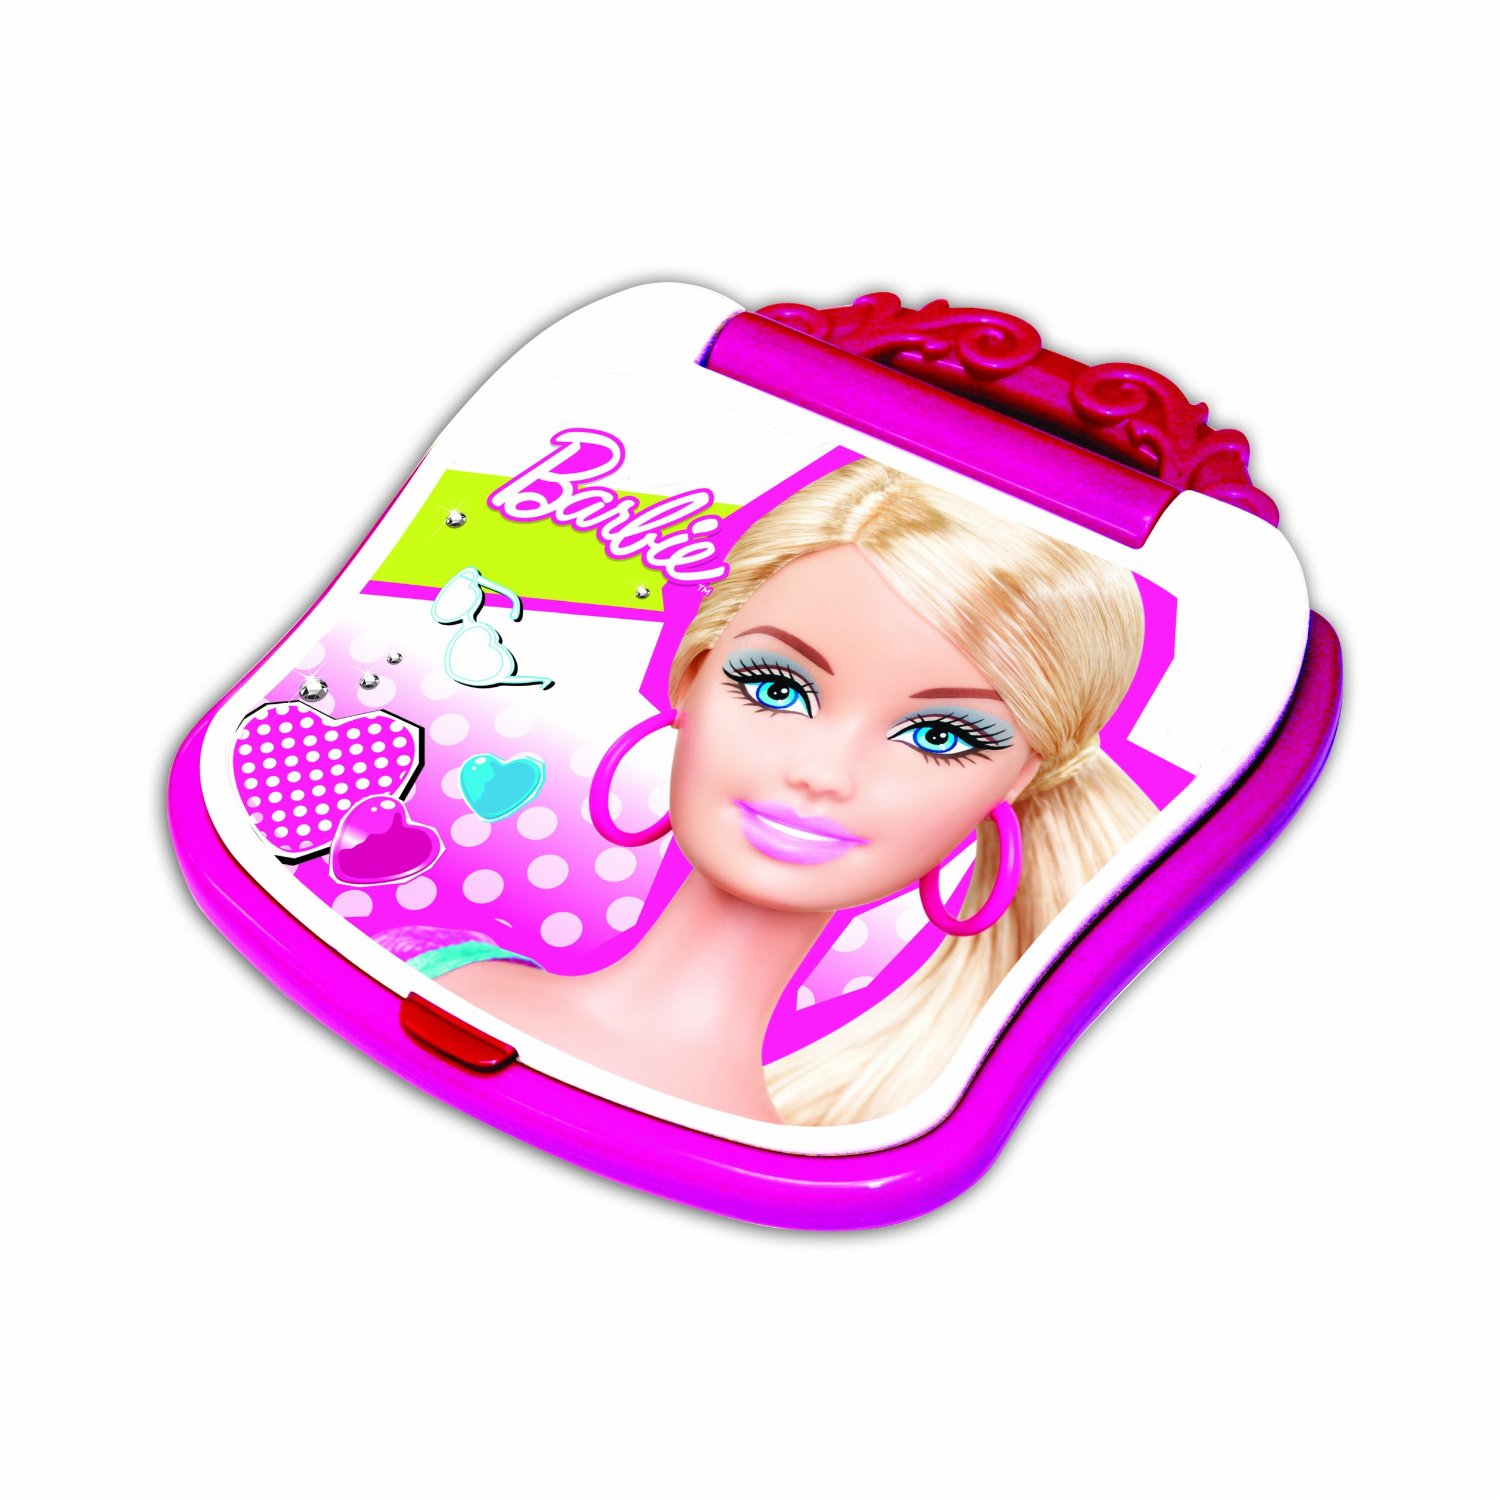 Barbie-laptop-BJ68-11-1